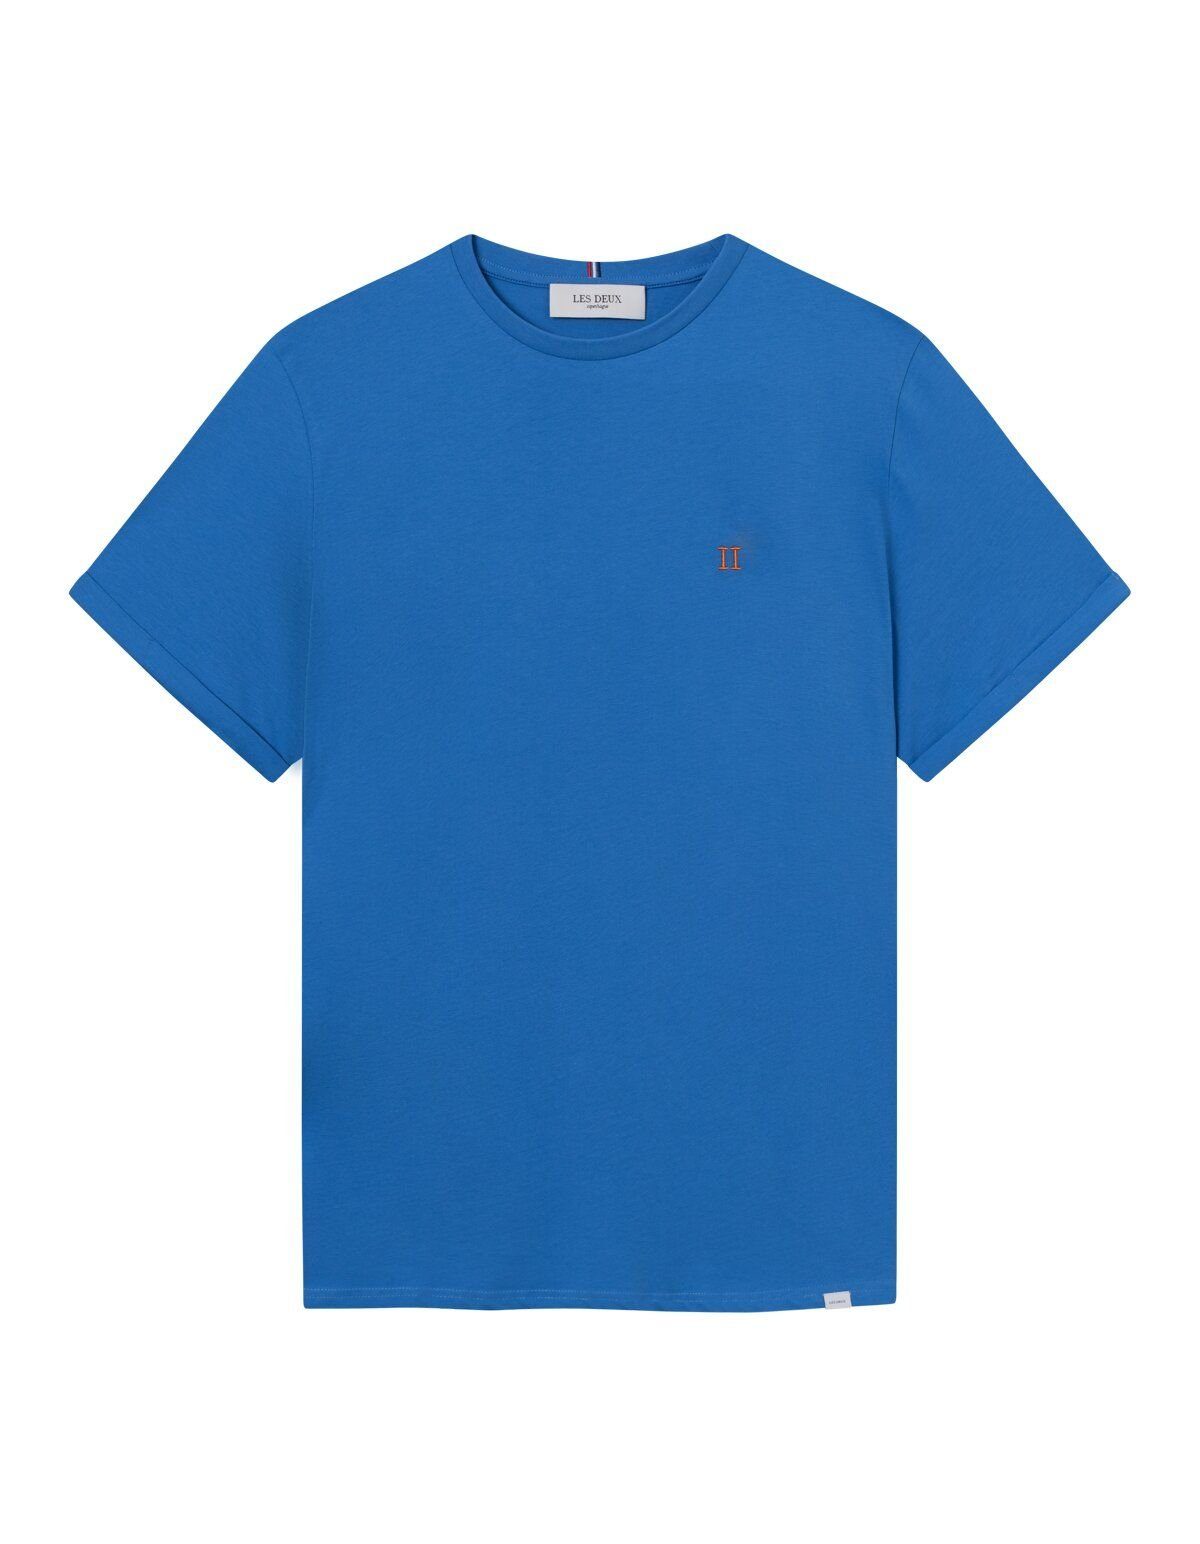 Deux Bauumwolle, atmungsaktiv Les 471730-Palace T-Shirt reine Blue/o